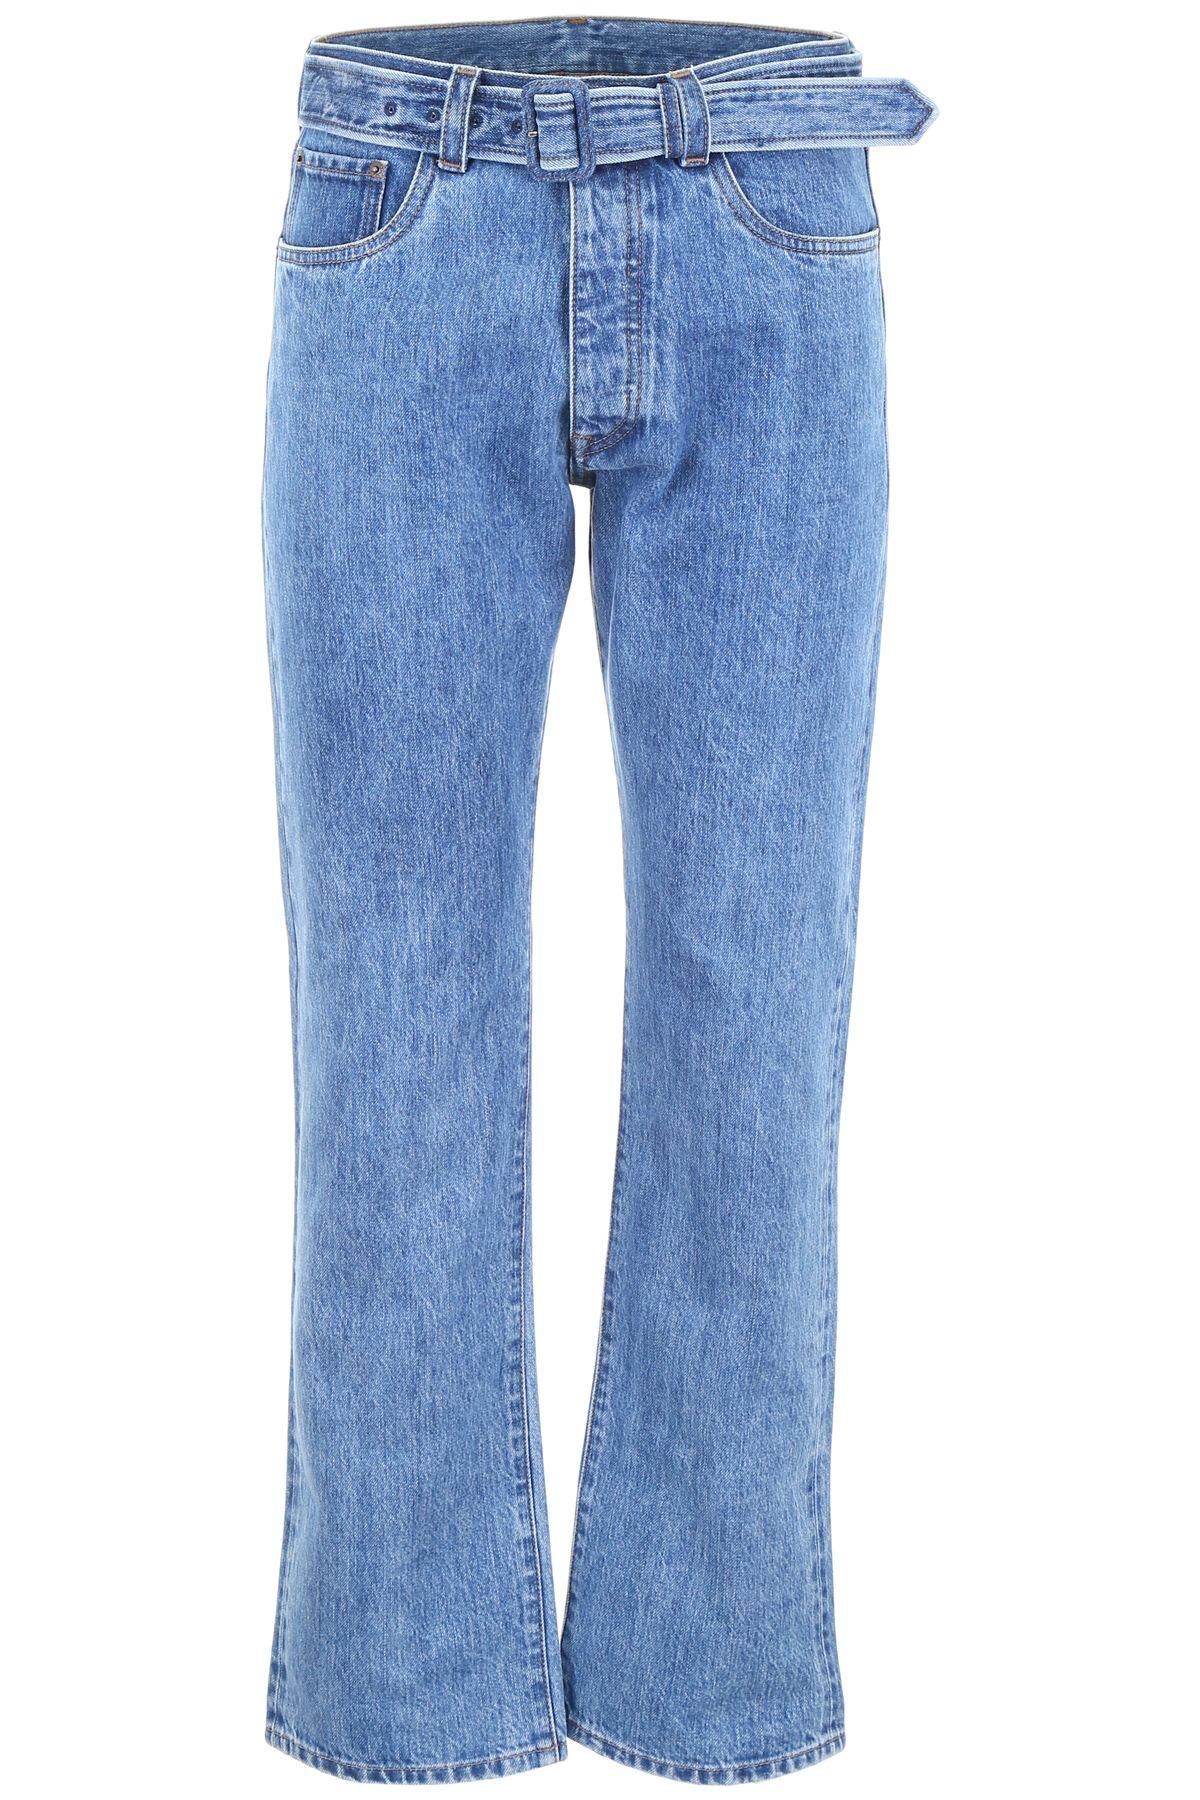 Five Triangle Logo - Prada Jeans With Triangle Logo In Light Denim|Celeste | ModeSens